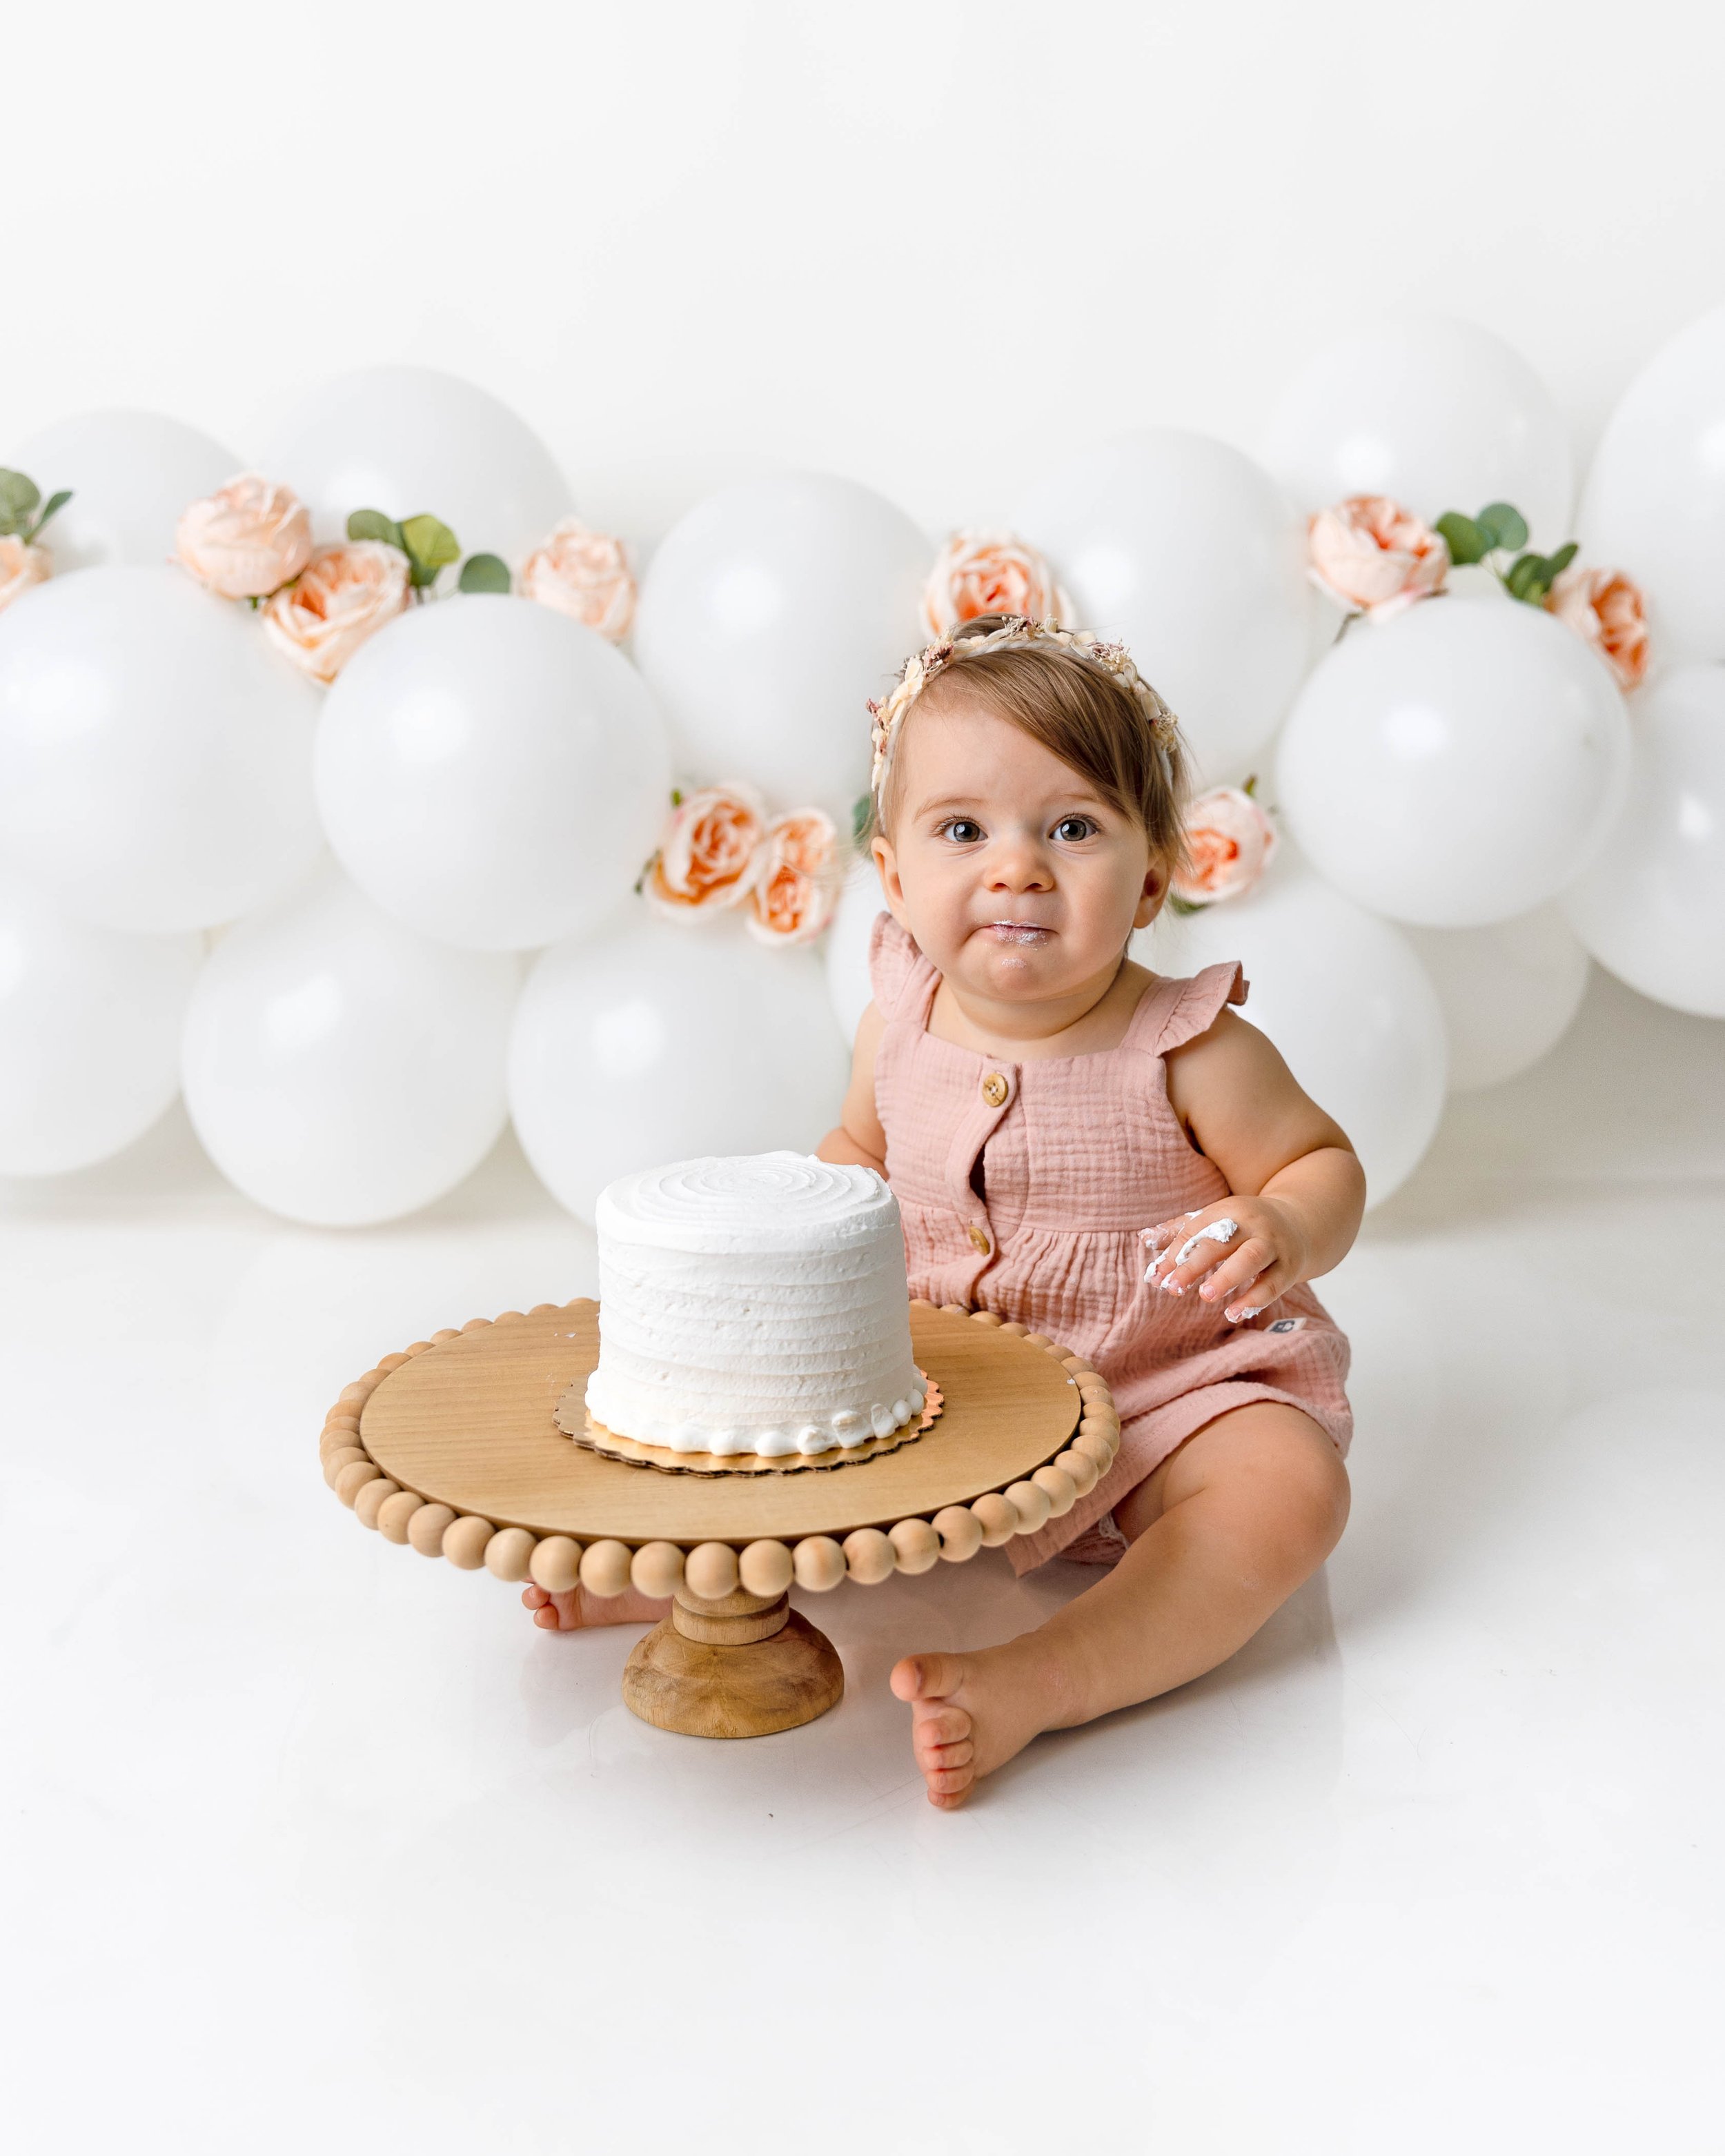 cake-smash-photos-first-birthday-images-newborn-photography-spokane-washington-8.jpg